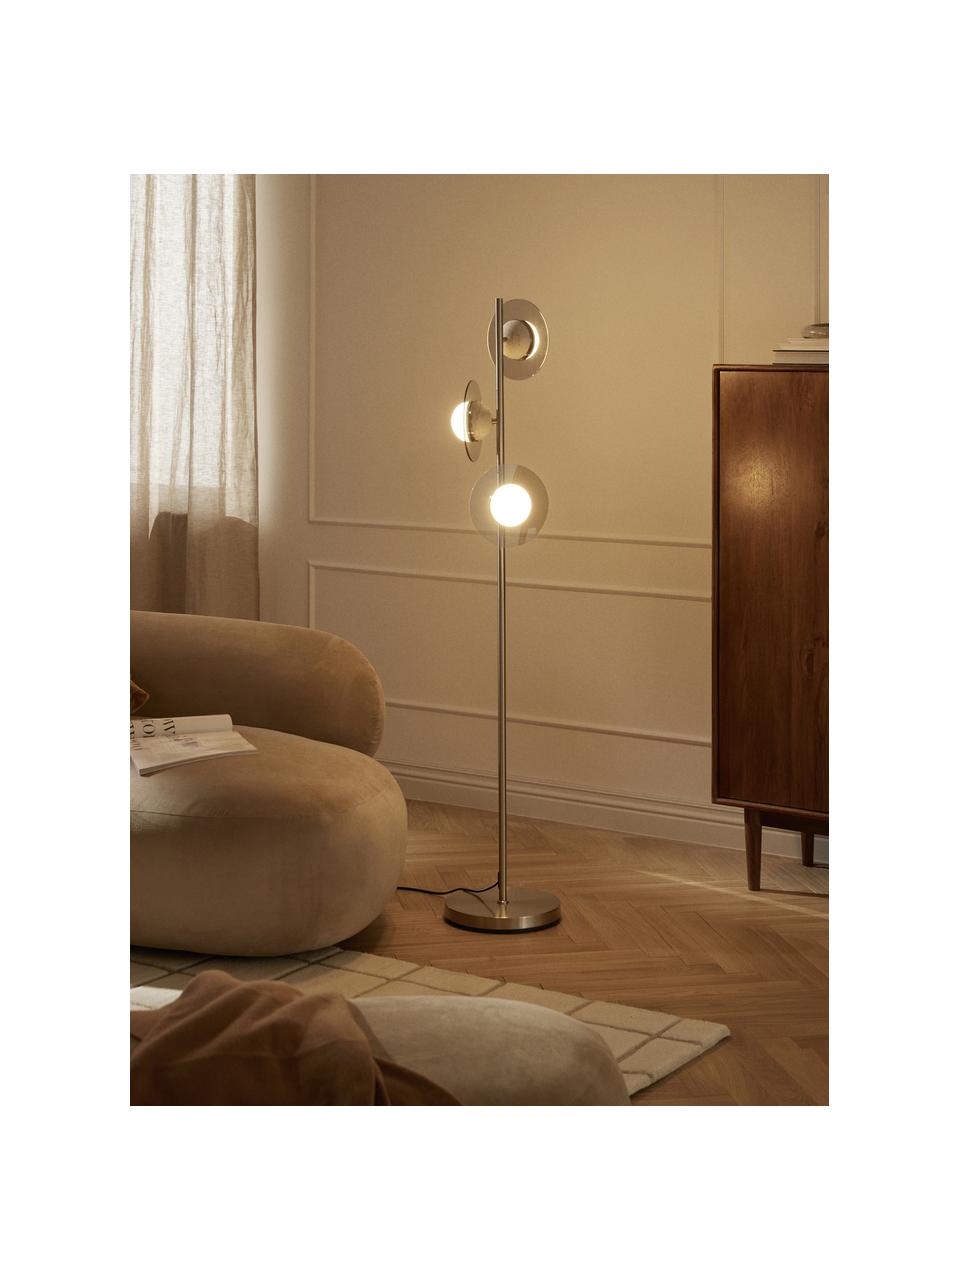 Lámpara de pie Orion, Pantalla: vidrio, travertino Detall, Travertino beige, gris claro,, Ø 10 x Al 17 cm, 250 ml